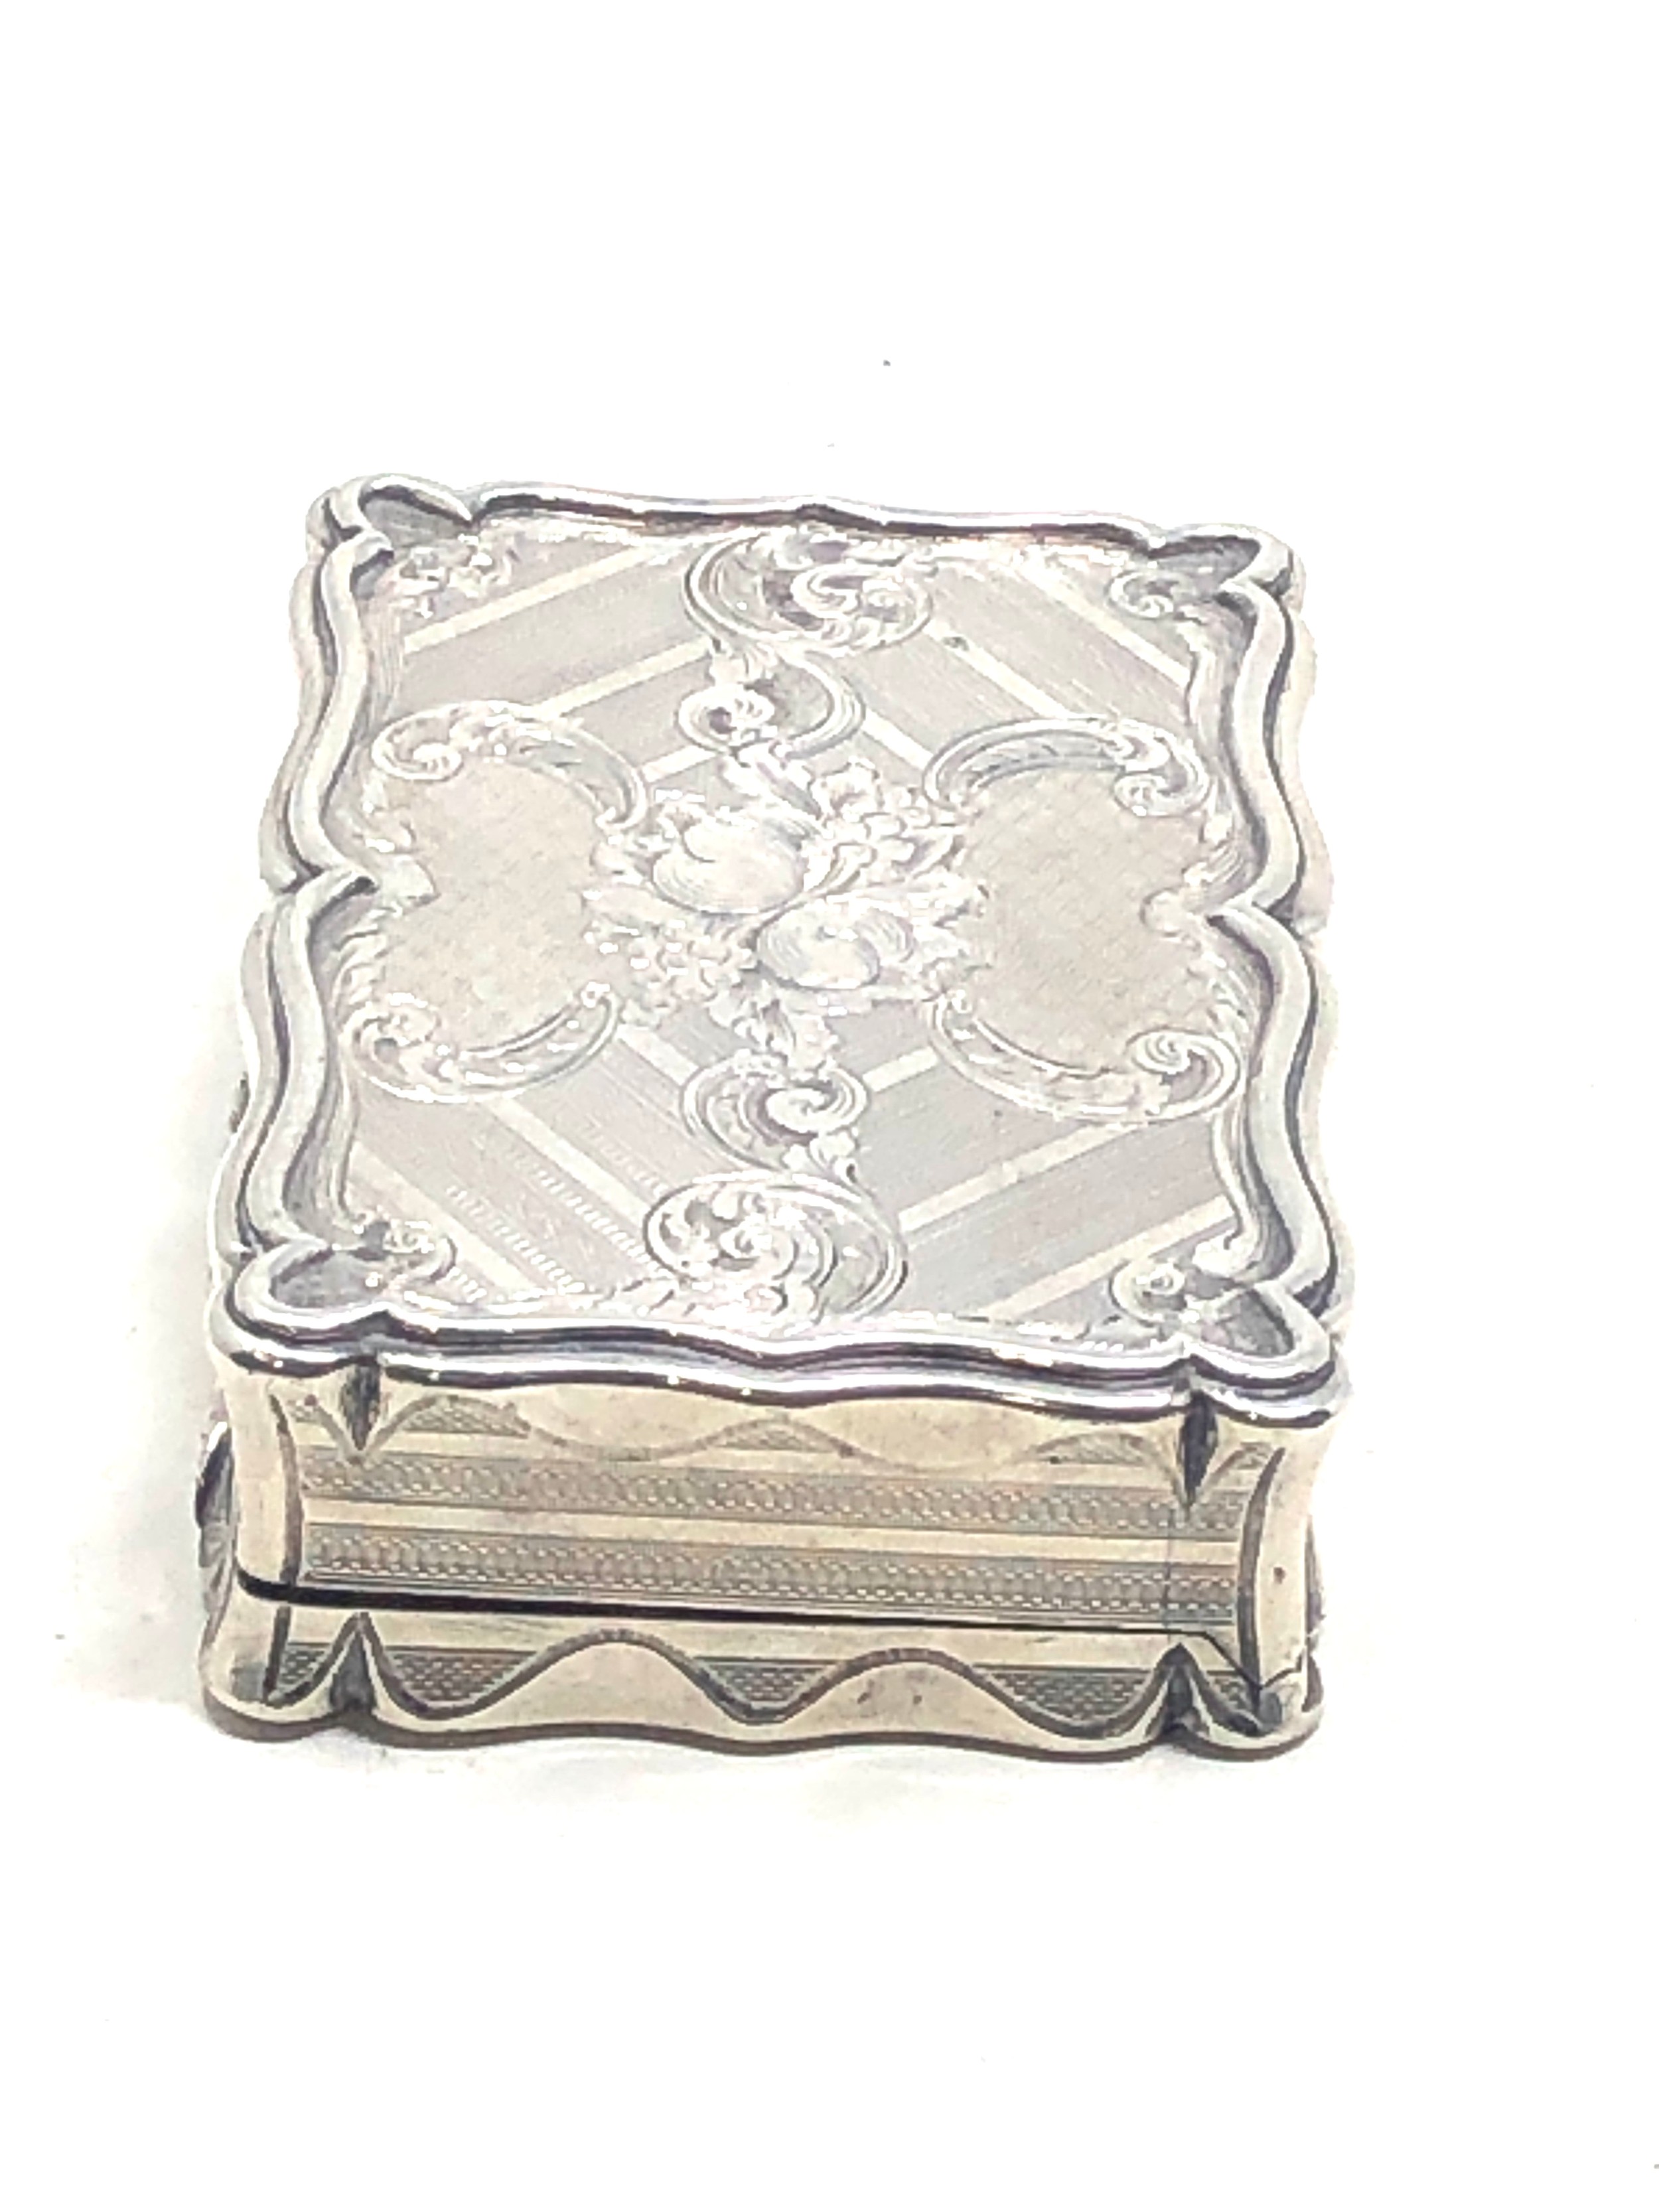 Fine Victorian silver snuff box Birmingham silver hallmarks makers E S measures approx 9.2cm by - Image 7 of 7